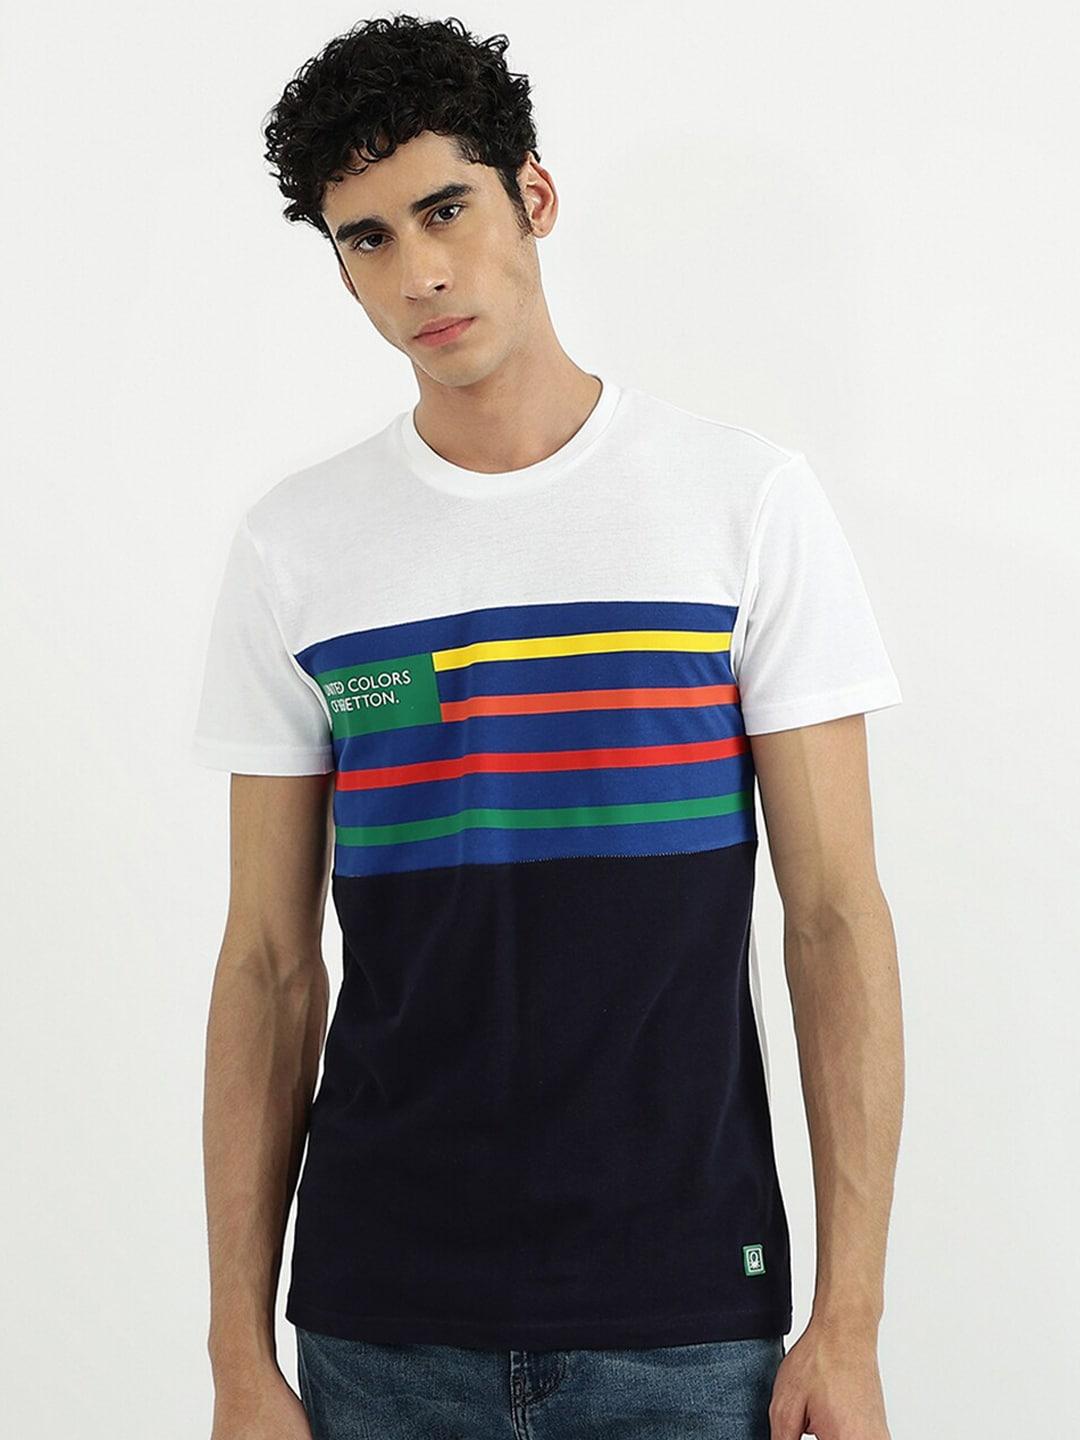 united-colors-of-benetton-men-black-&-white-colourblocked-cotton-t-shirt